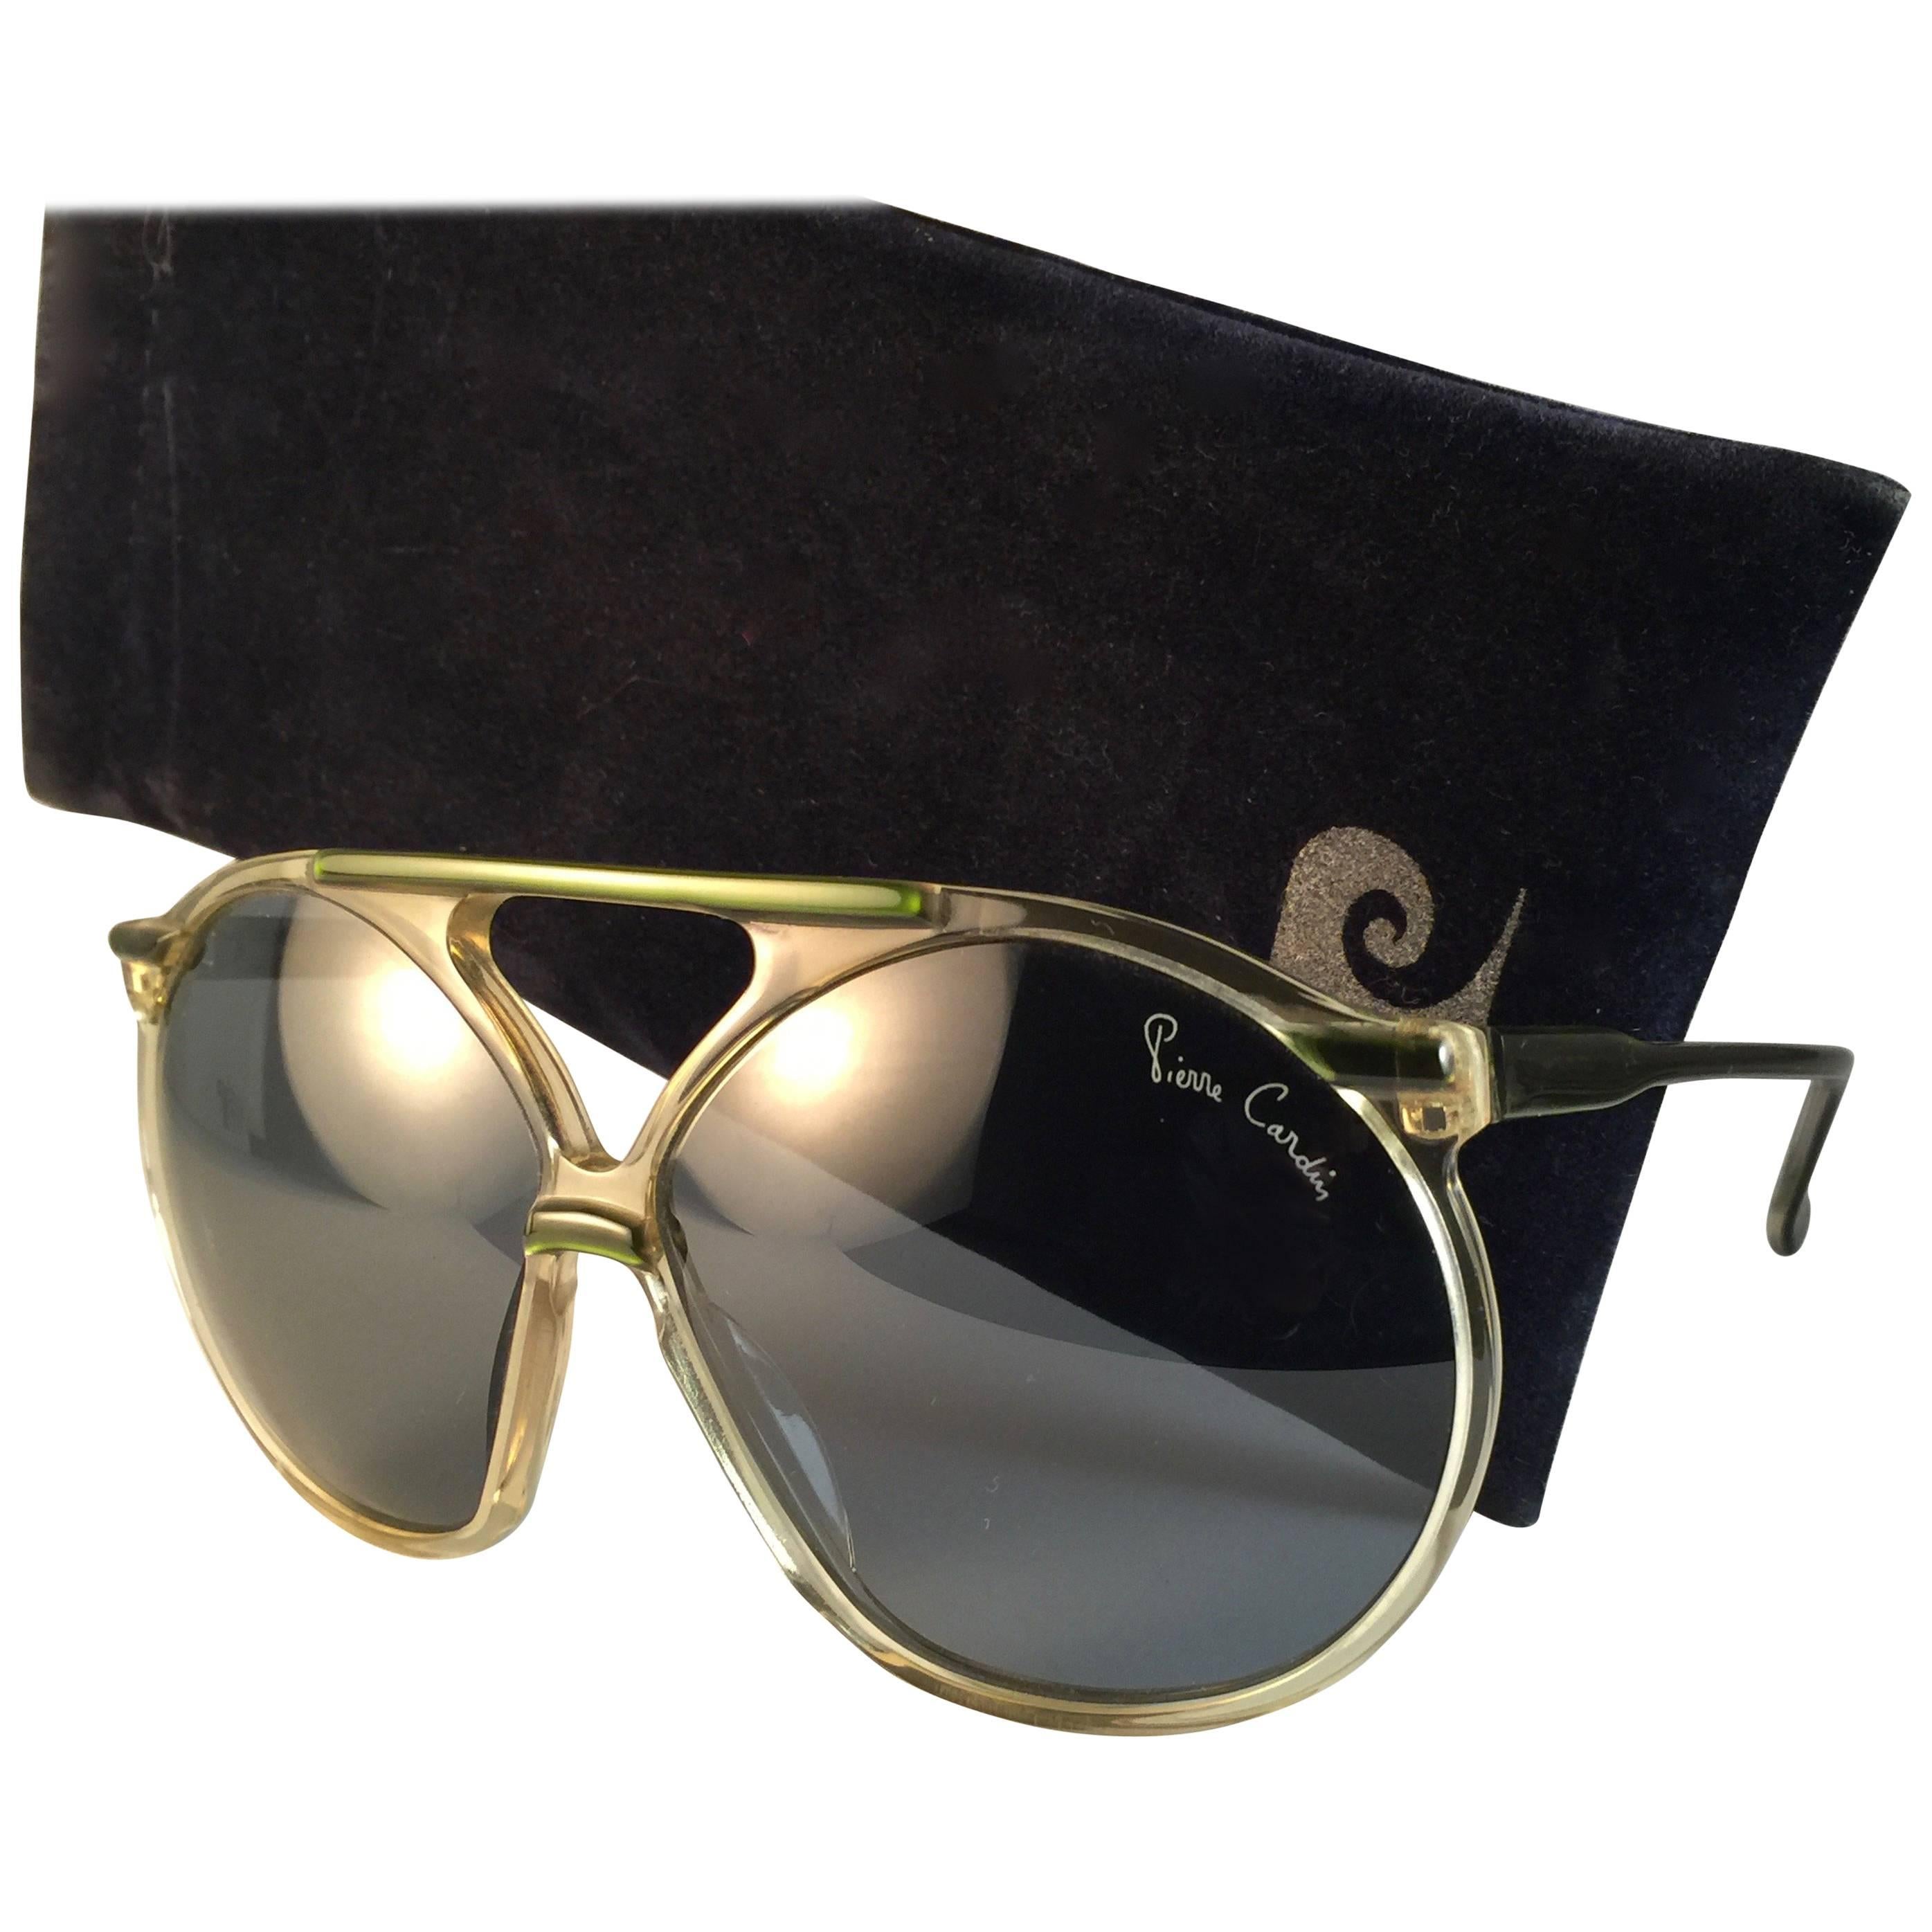 New Vintage Pierre Cardin Oversize Translucent Bug Eye Lens 1970's Sunglasses